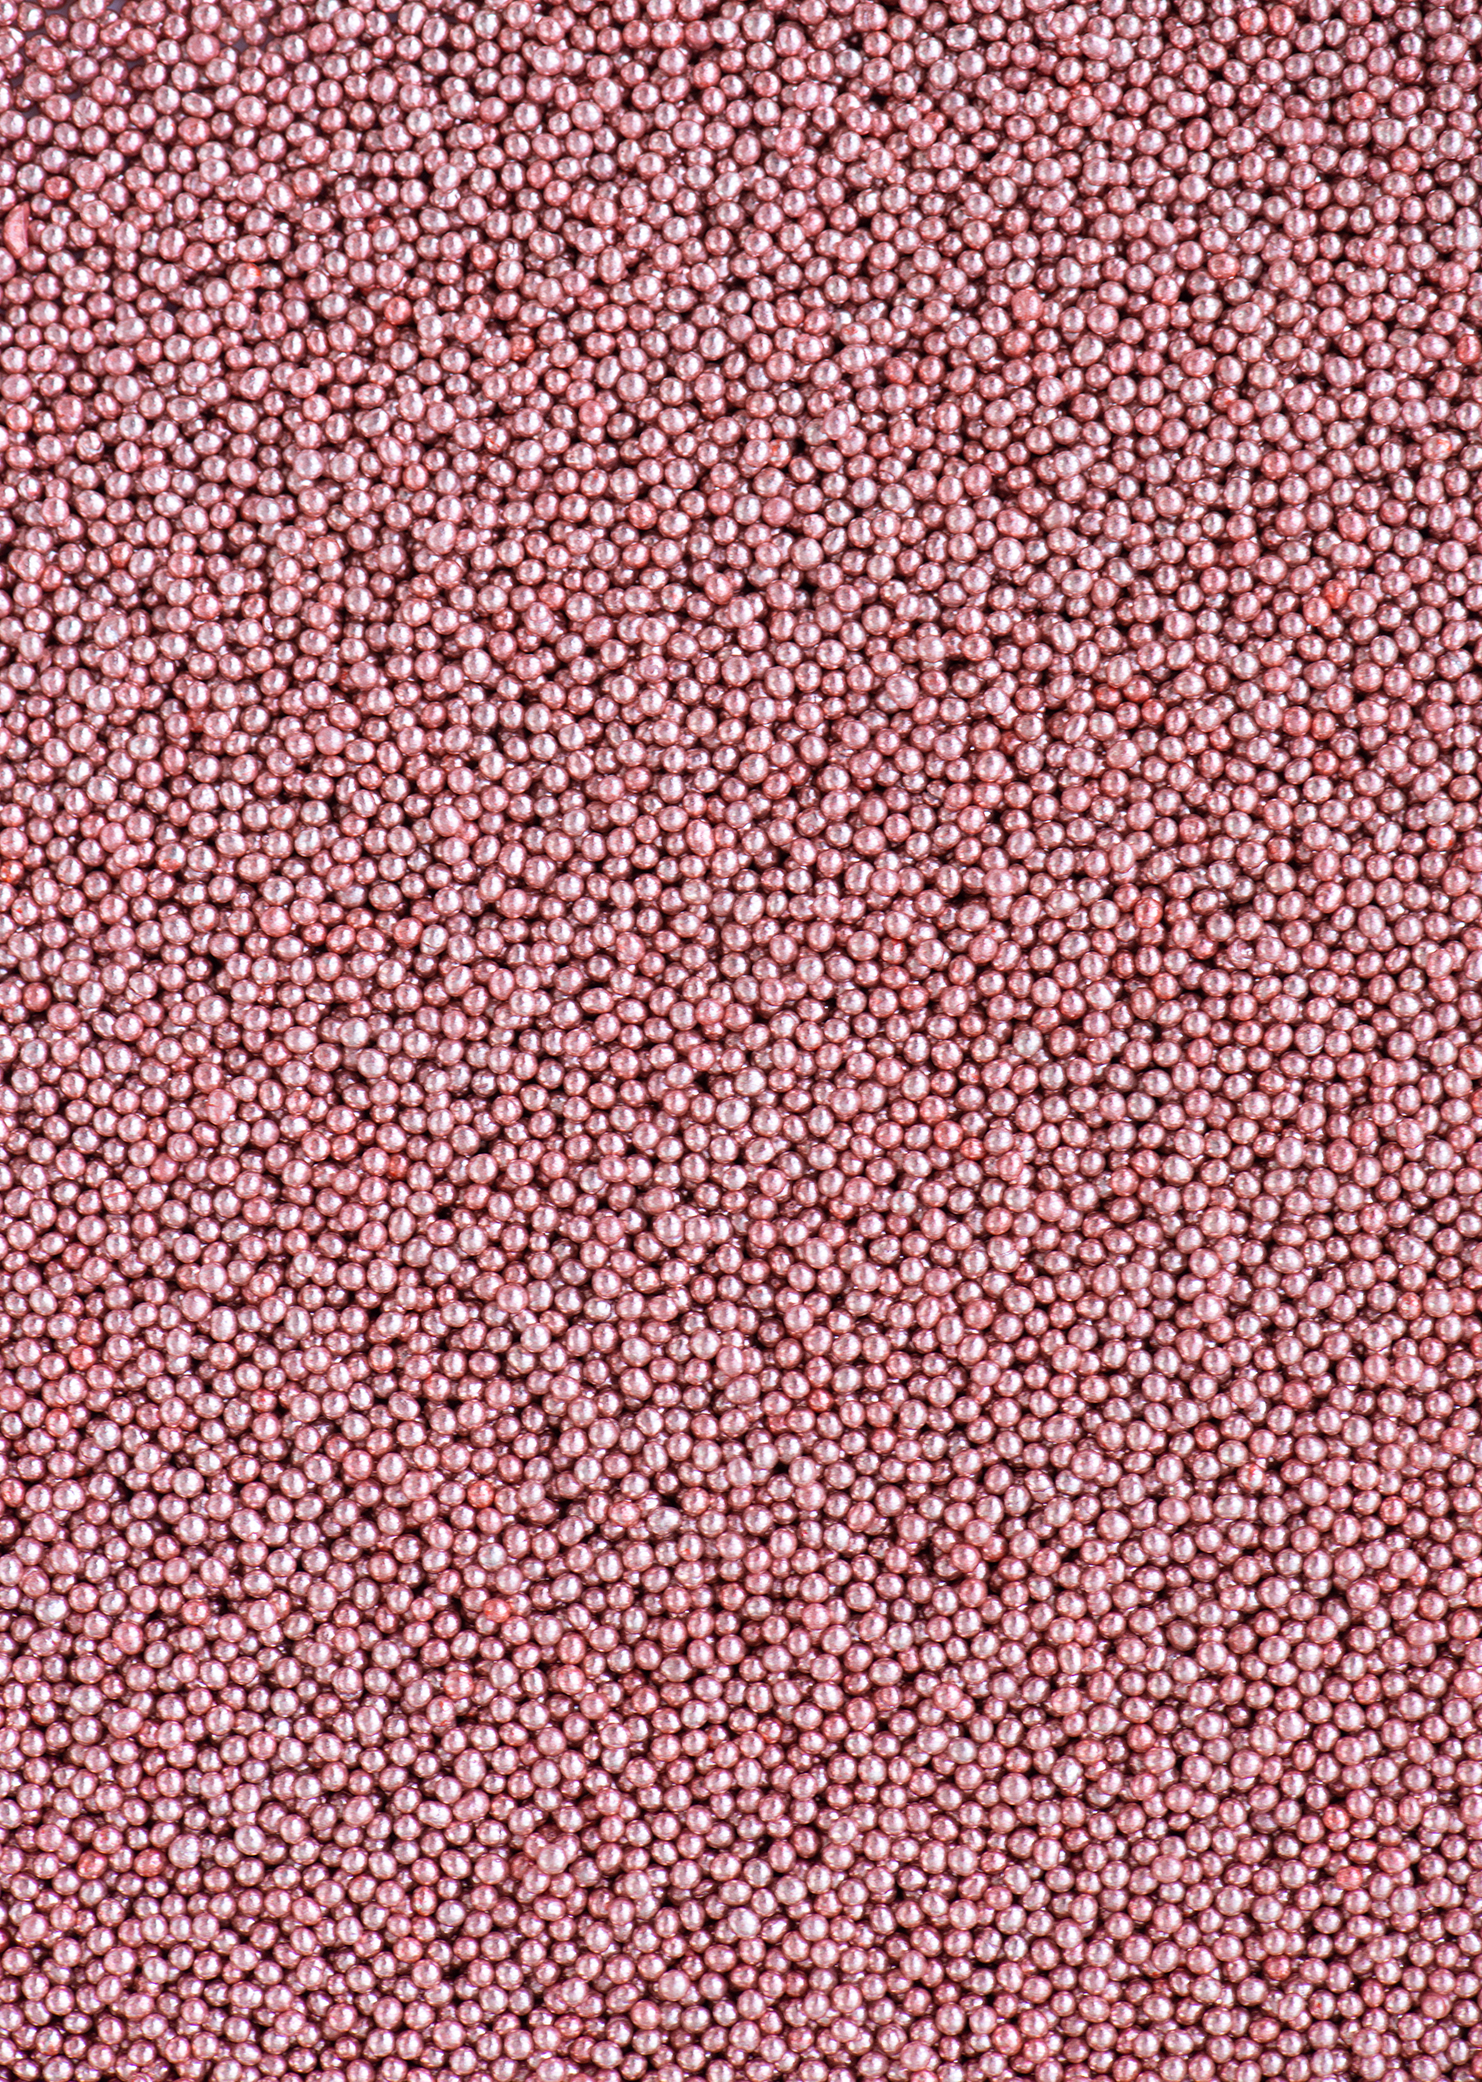 30g Jelly Fruit Beads - Pastel – Diaphona